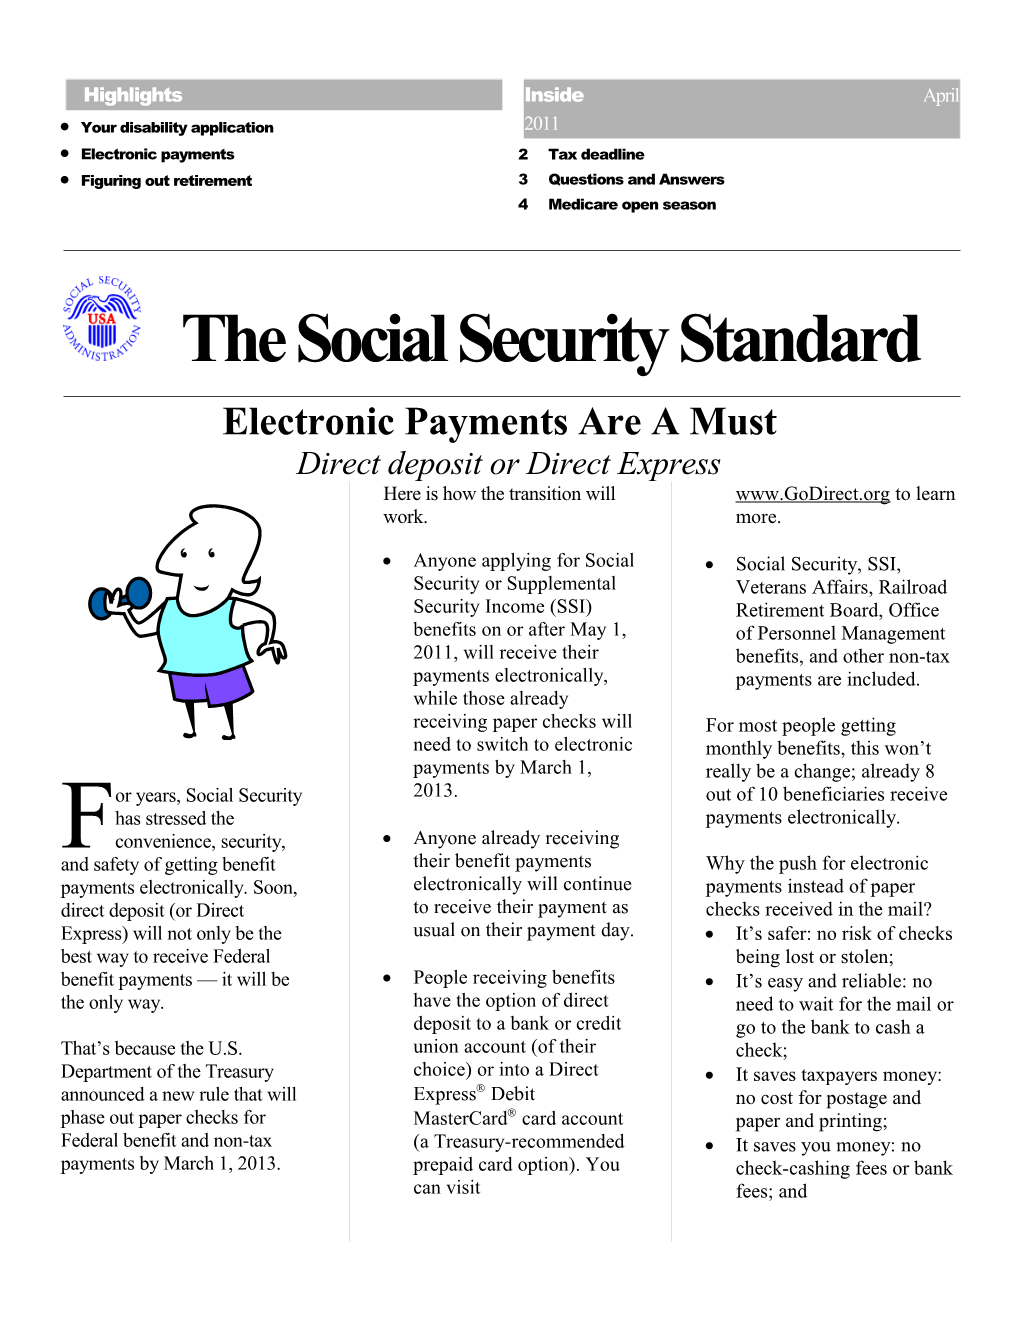 The Social Security Standard April 2011 Newsletter